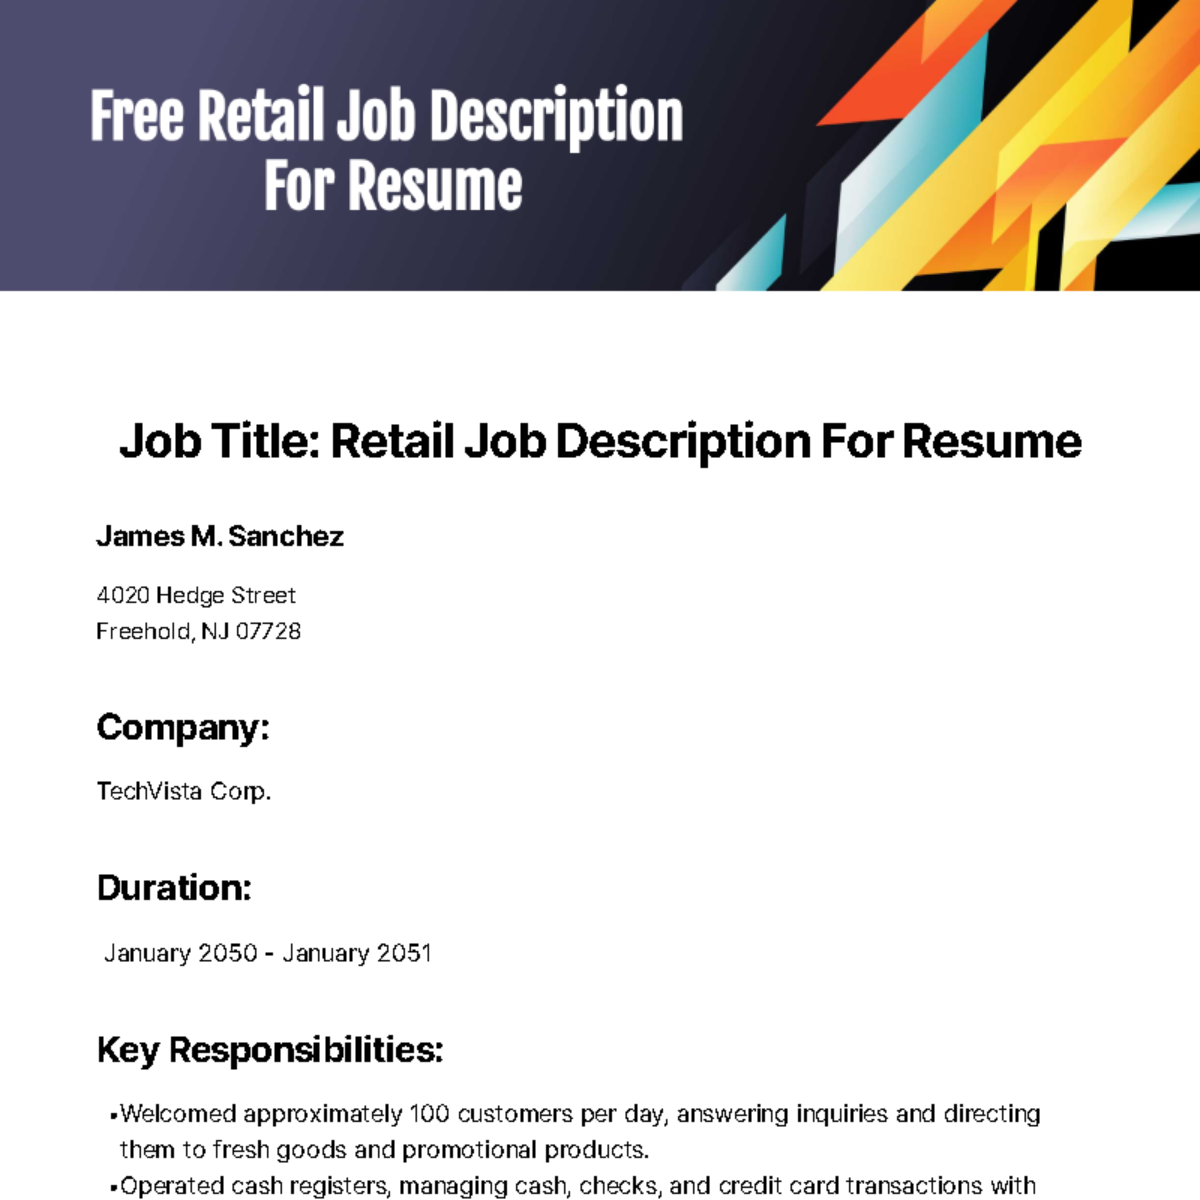 Free Retail Job Description For Resume Template